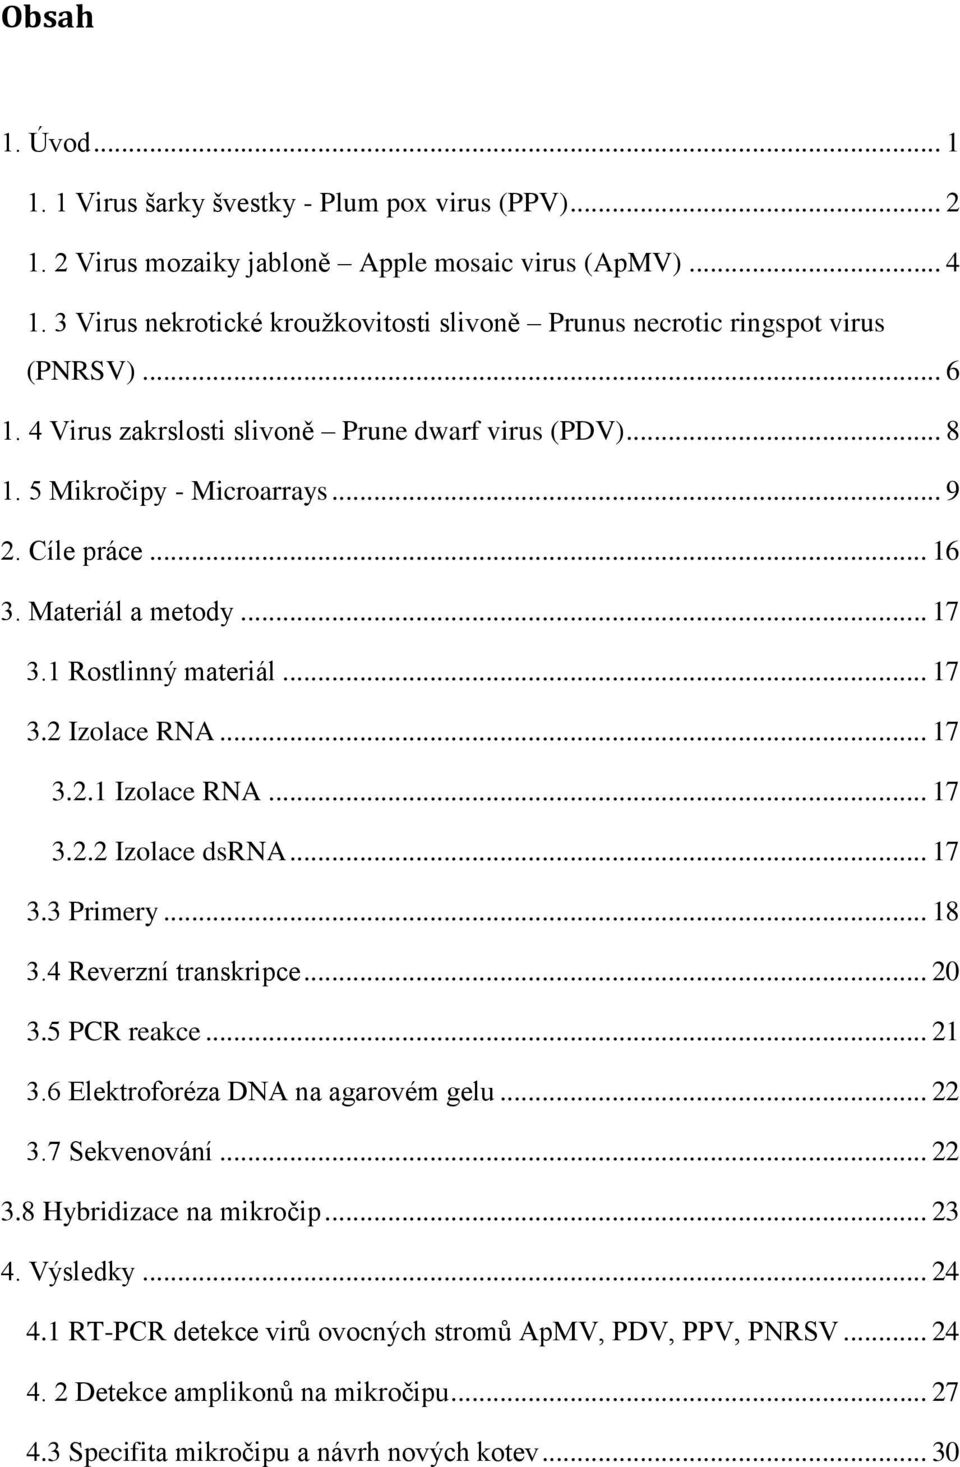 Materiál a metody... 17 3.1 Rostlinný materiál... 17 3.2 Izolace RNA... 17 3.2.1 Izolace RNA... 17 3.2.2 Izolace dsrna... 17 3.3 Primery... 18 3.4 Reverzní transkripce... 20 3.5 PCR reakce... 21 3.